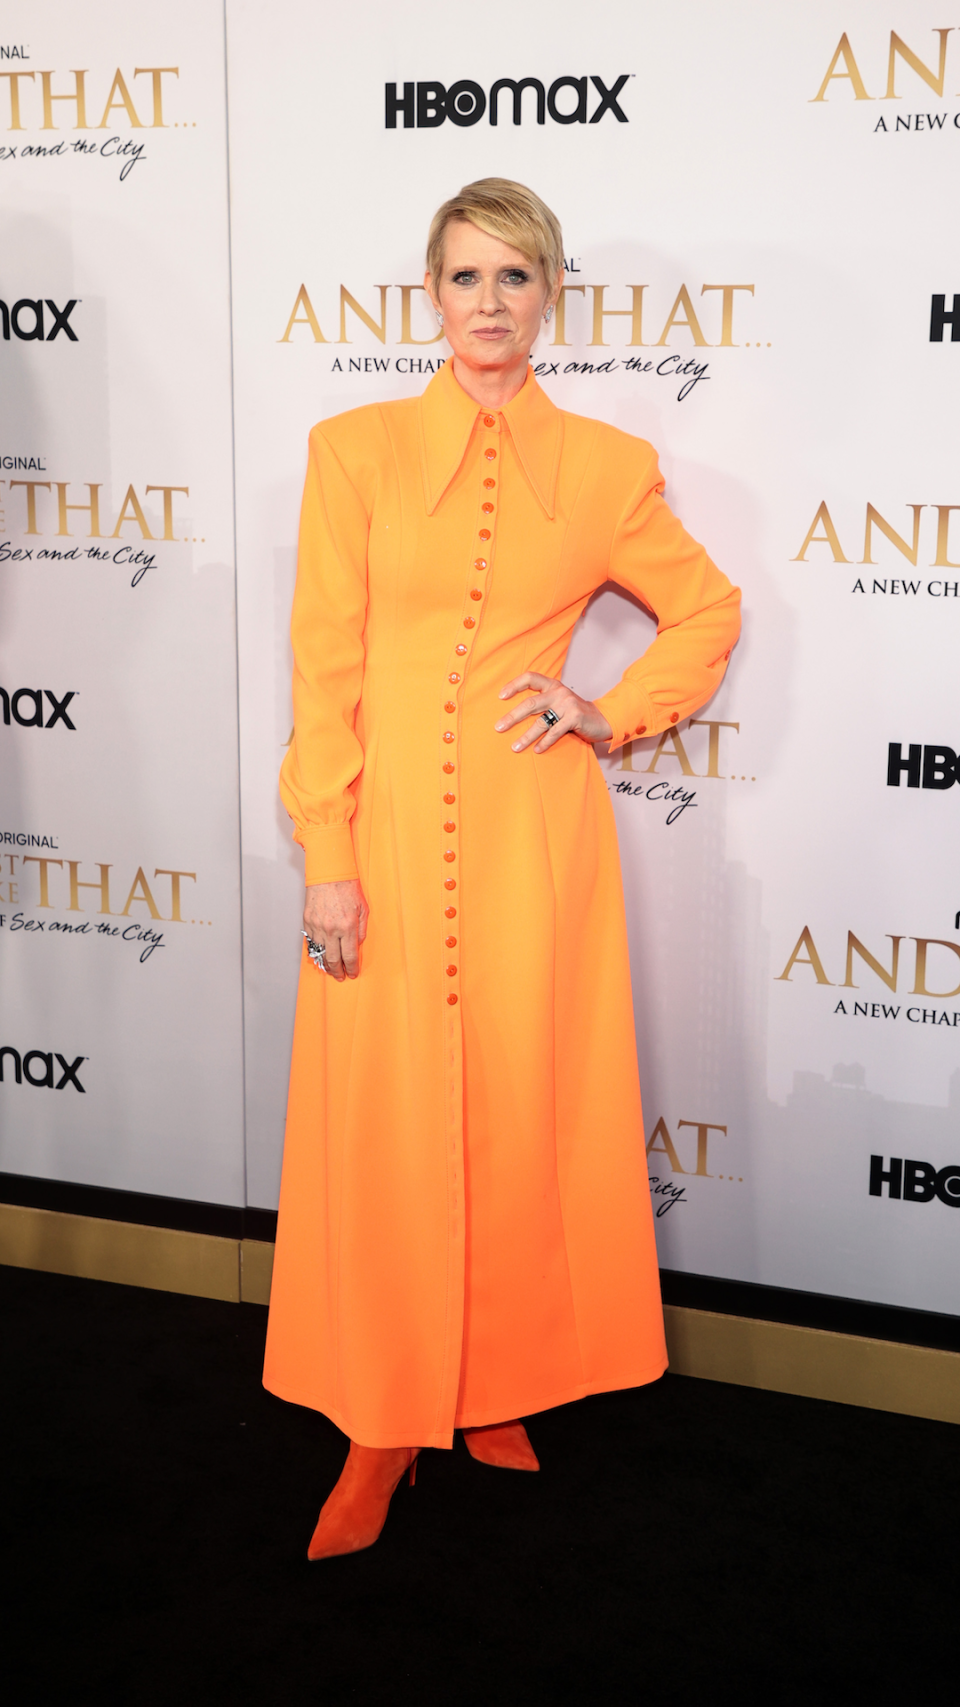 Cynthia Nixon attends HBO Max's premiere of 